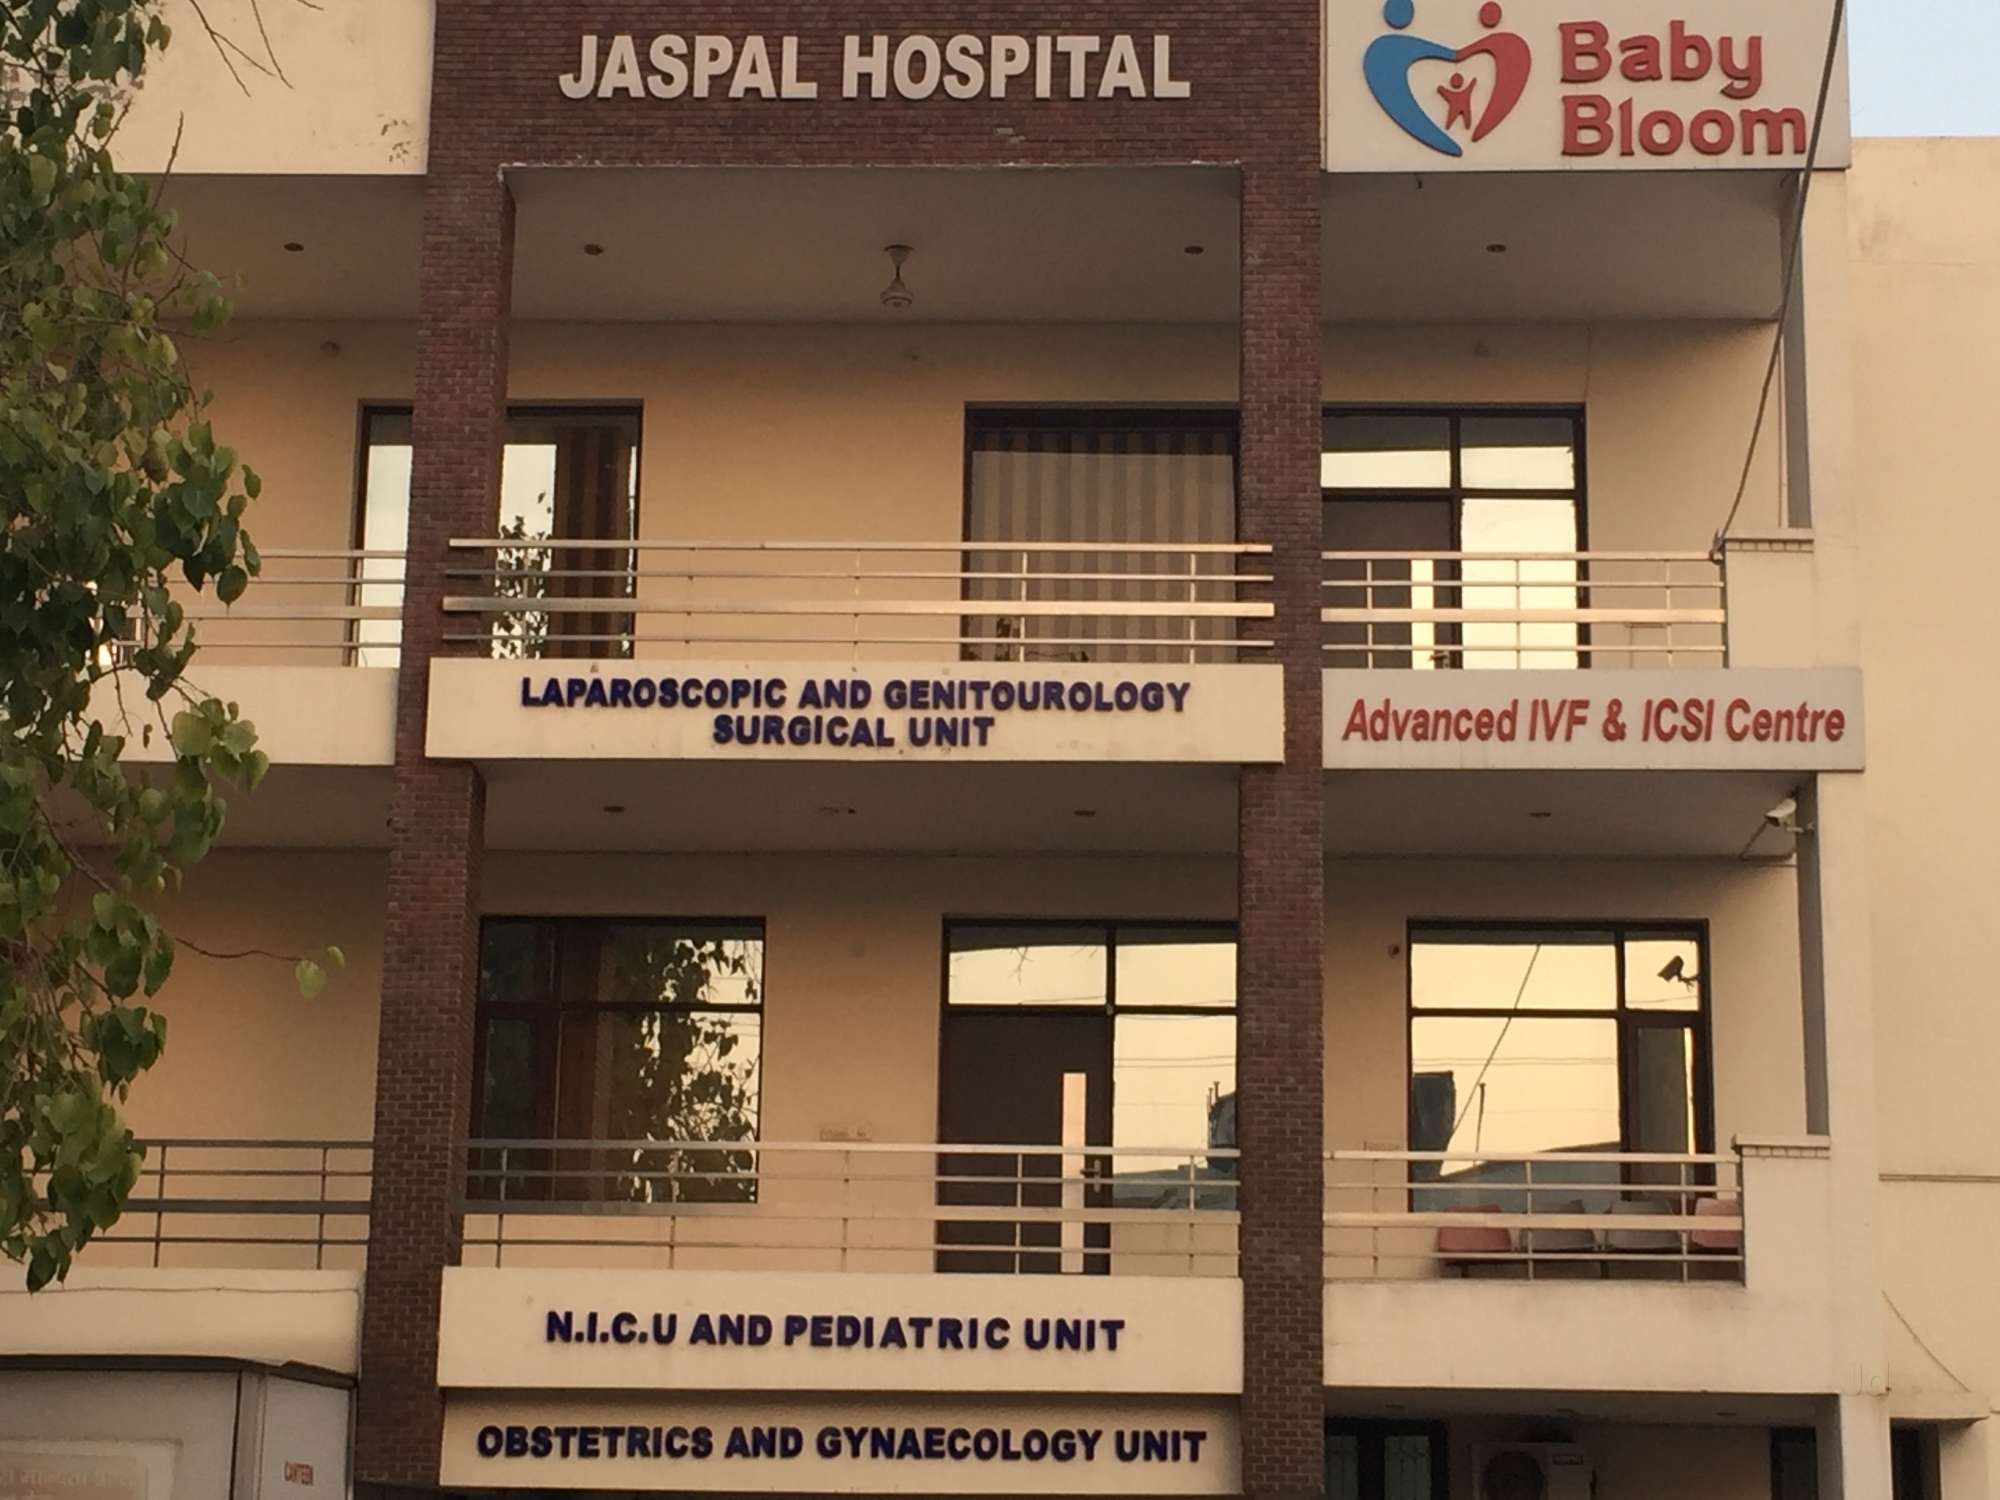 Jaspal hospital|Clinics|Medical Services